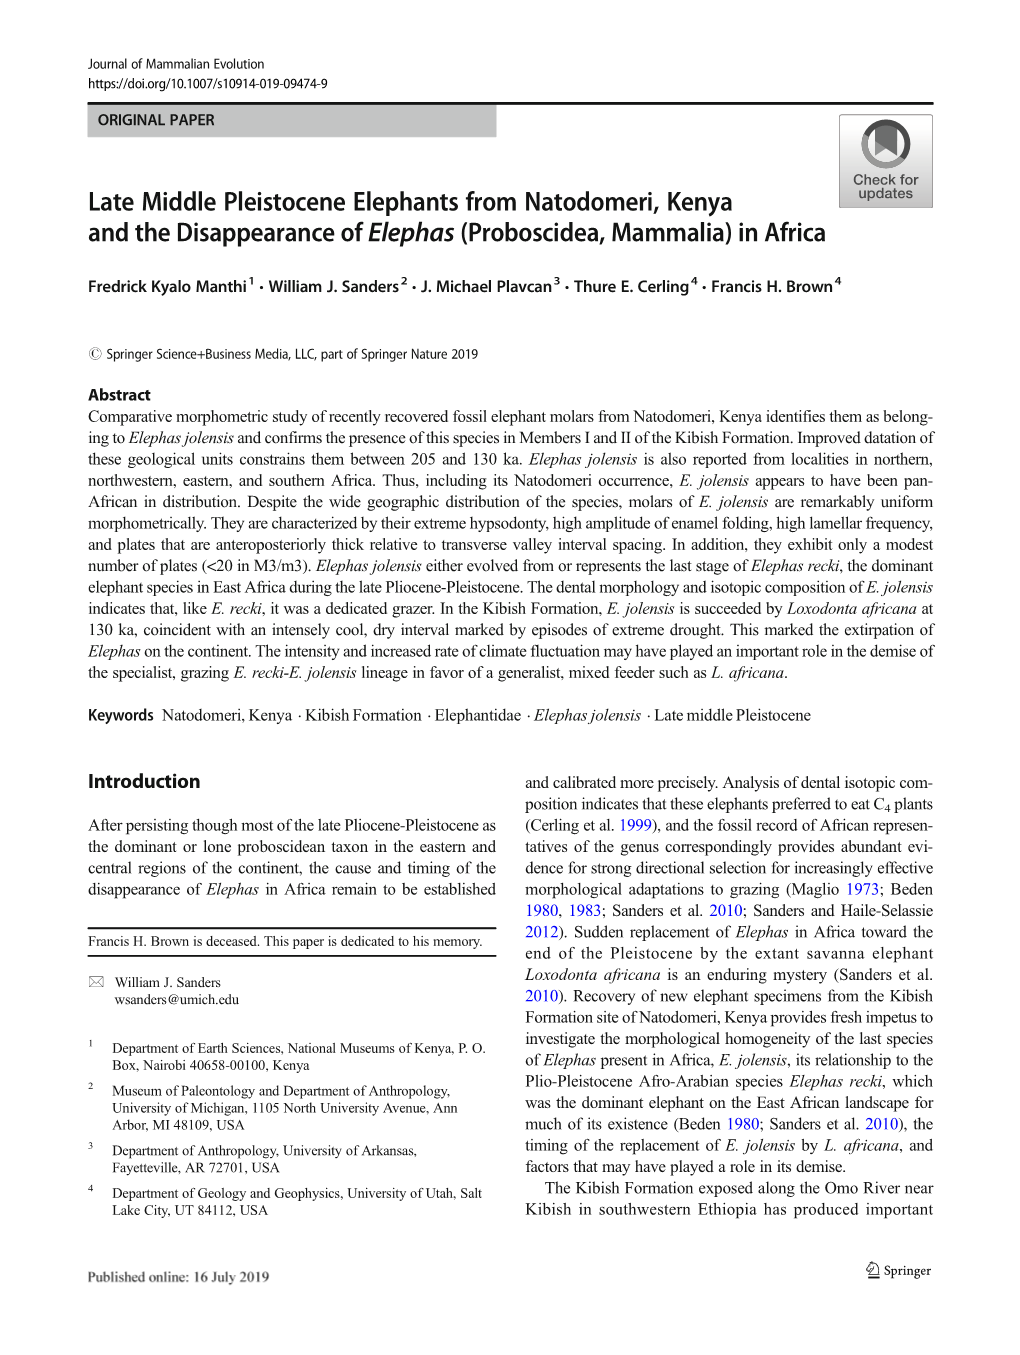 Late Middle Pleistocene Elephants from Natodomeri, Kenya and the Disappearance of Elephas (Proboscidea, Mammalia) in Africa